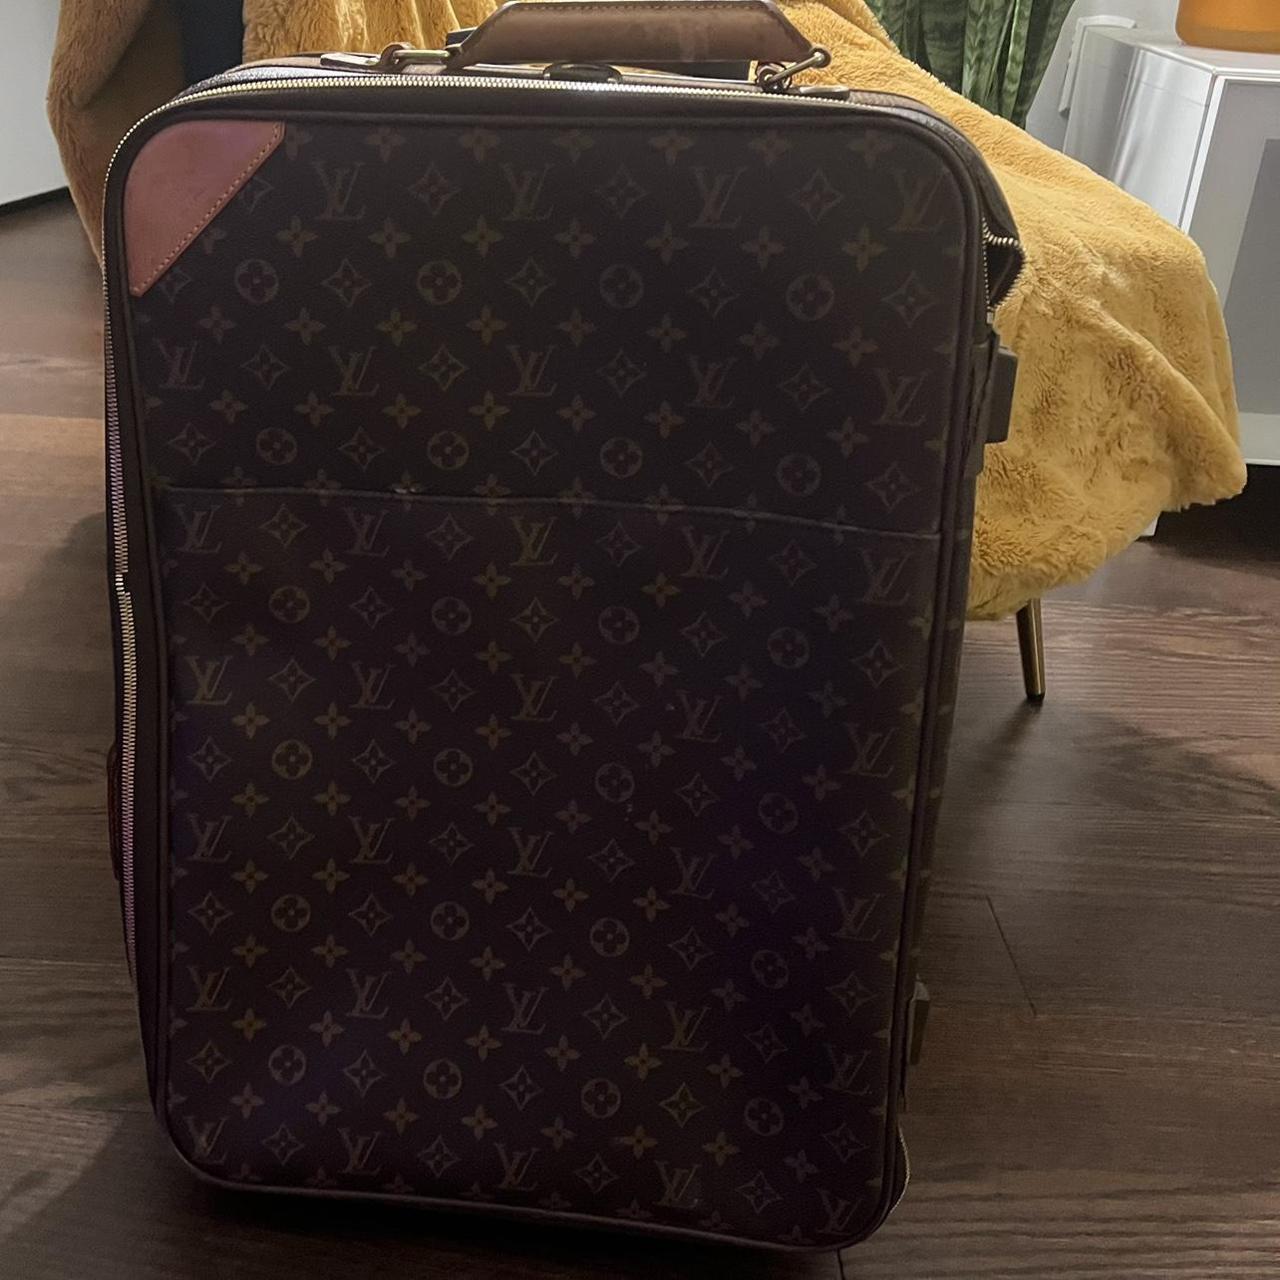 Louis Vuitton rolling luggage ( 2 wheels), - huge